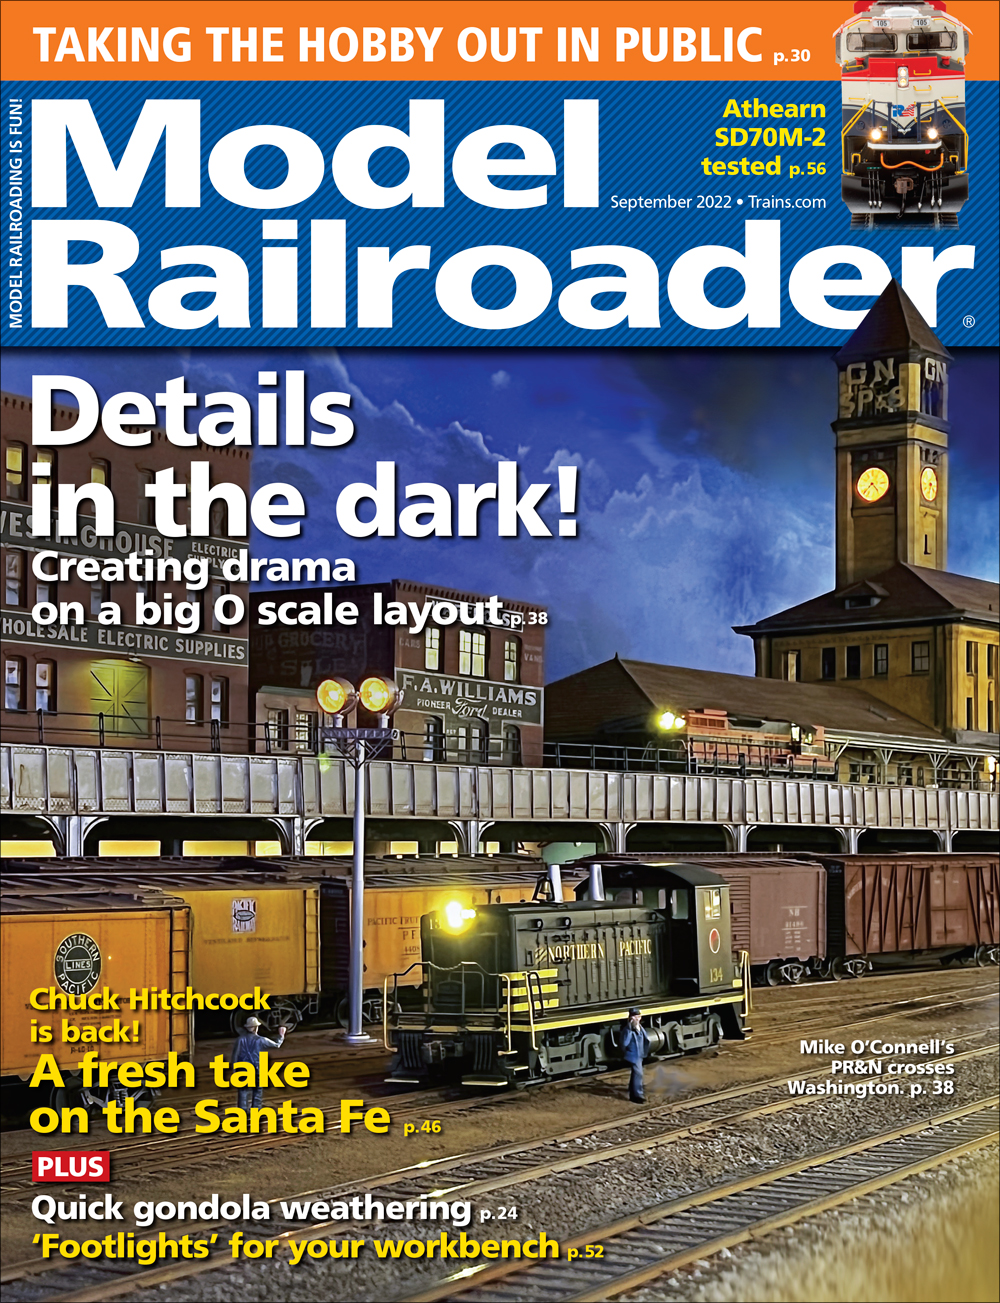 RAILWAY MODELLER MAGAZINES VARIOUS ISSUES 2003 